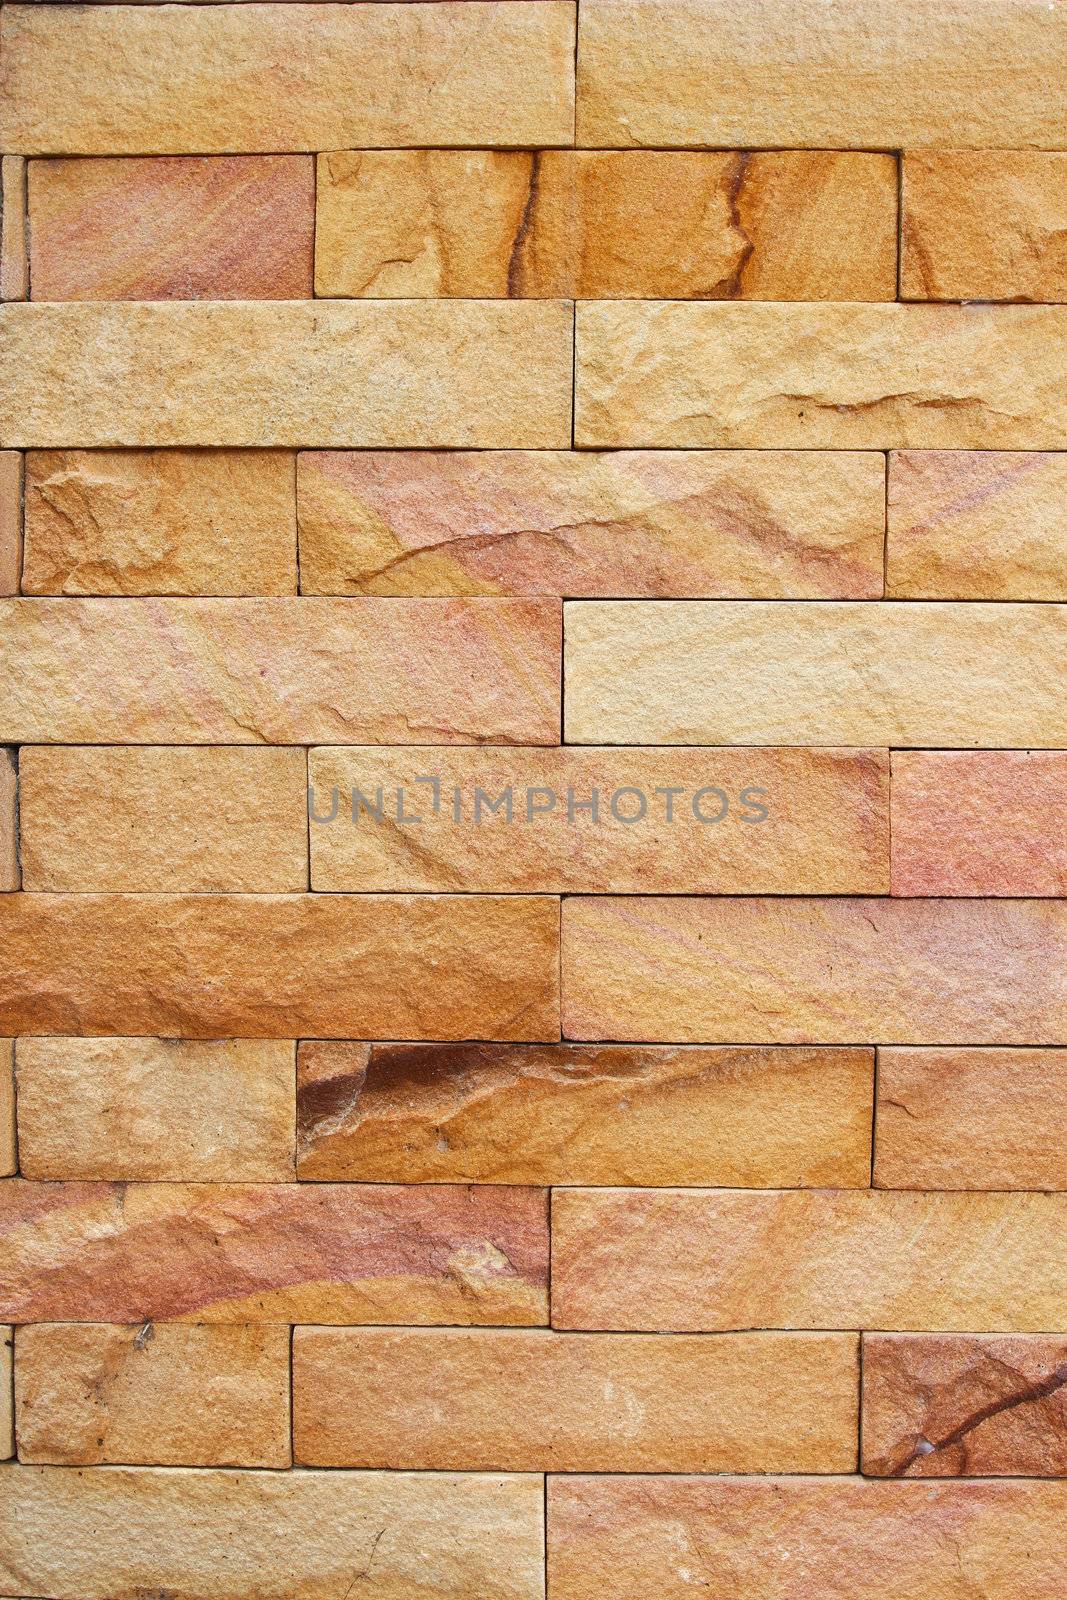 modern pattern of stone wall decorative surfaces by bajita111122